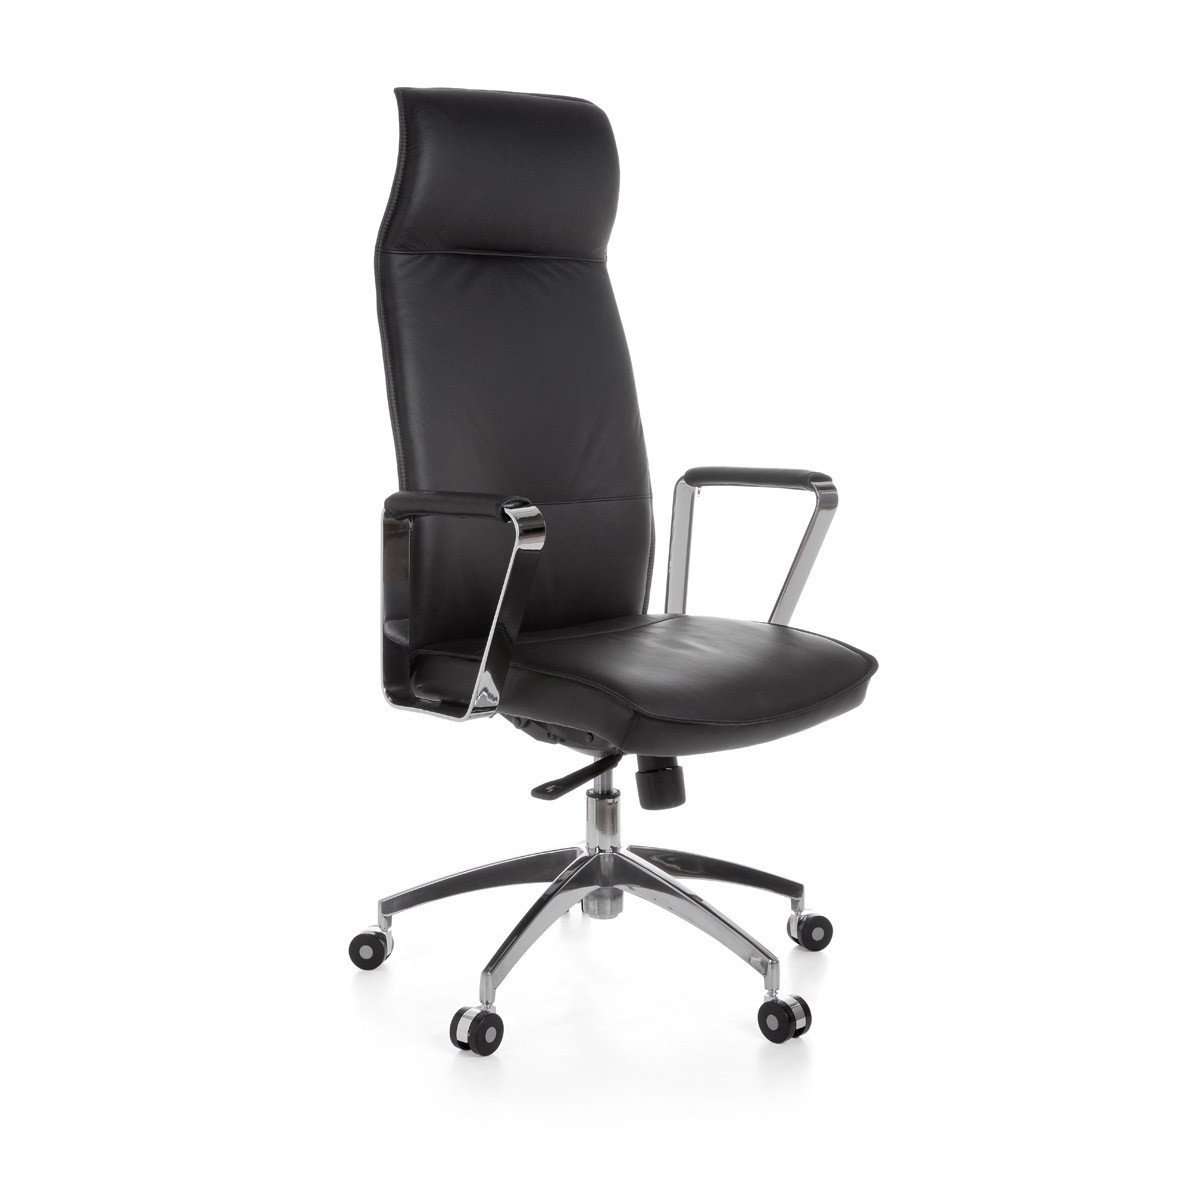 Nancy's Williamsbridge Leather Office Chair - Black Ergonomic Office Chair - Office Chairs For Adults